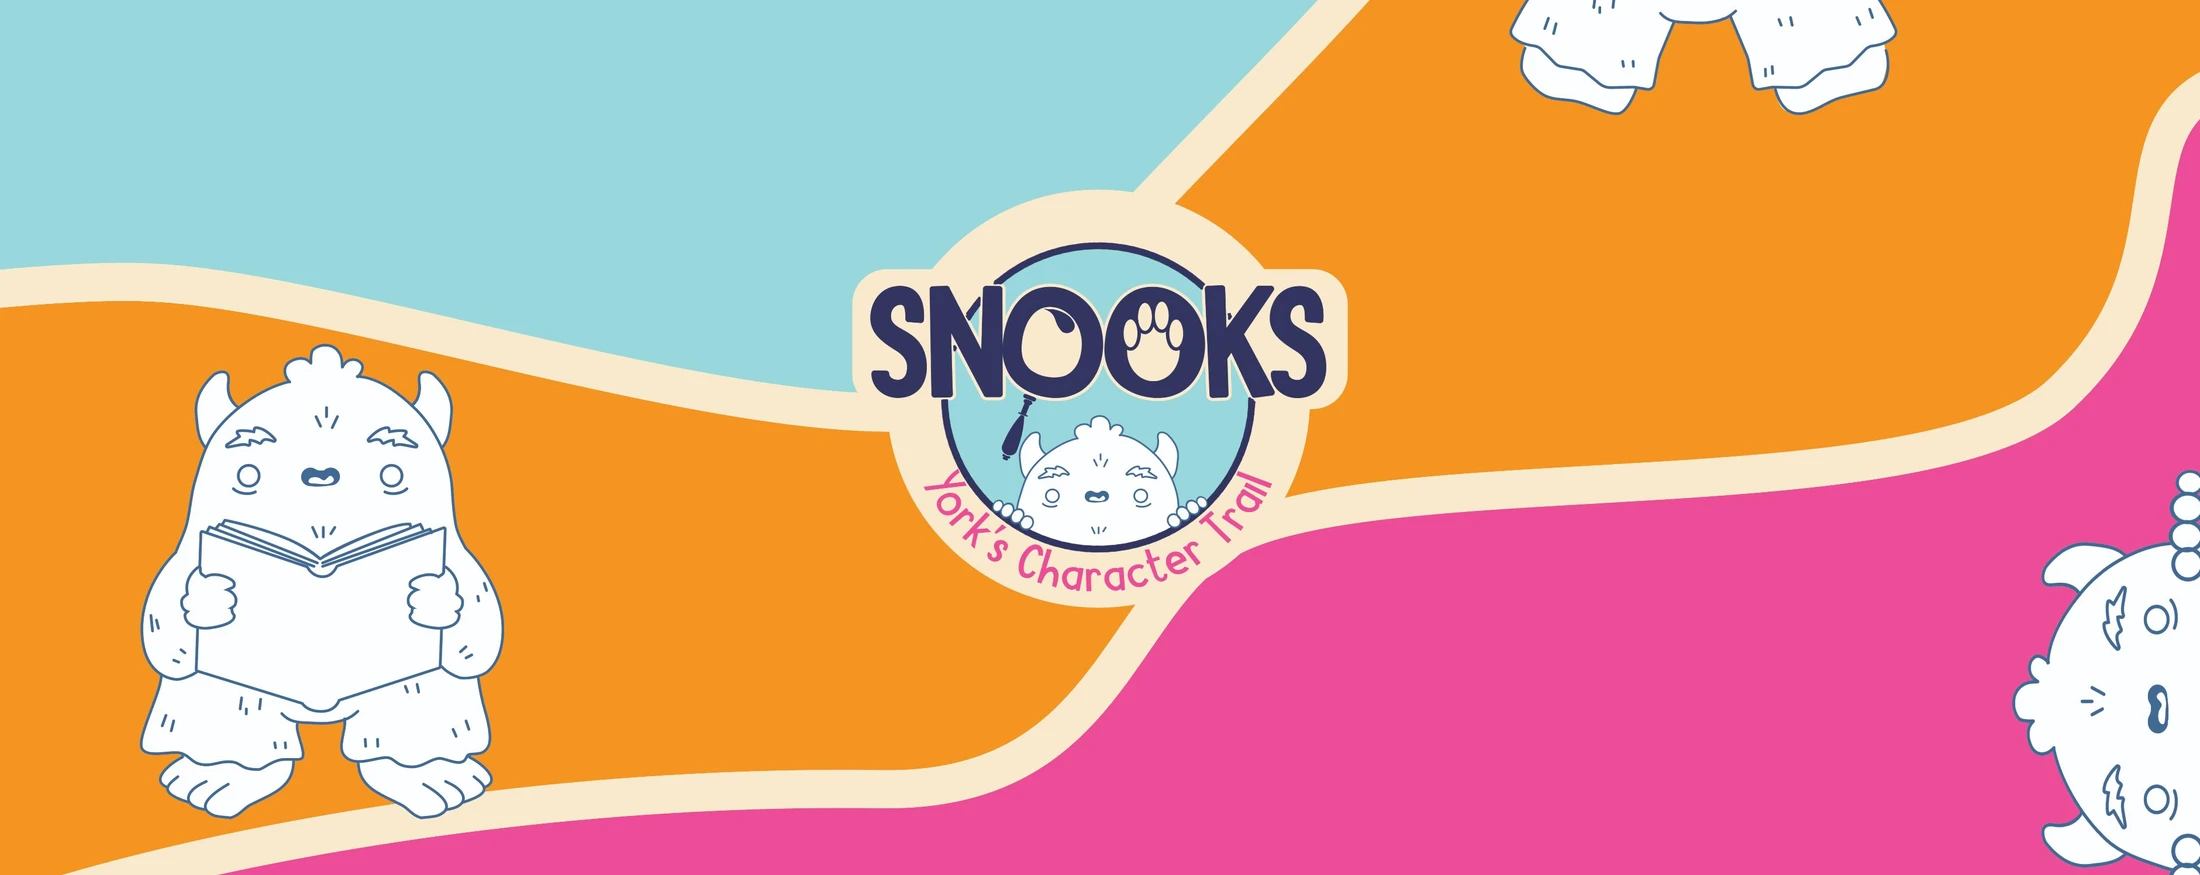 Snooks web header Compressed